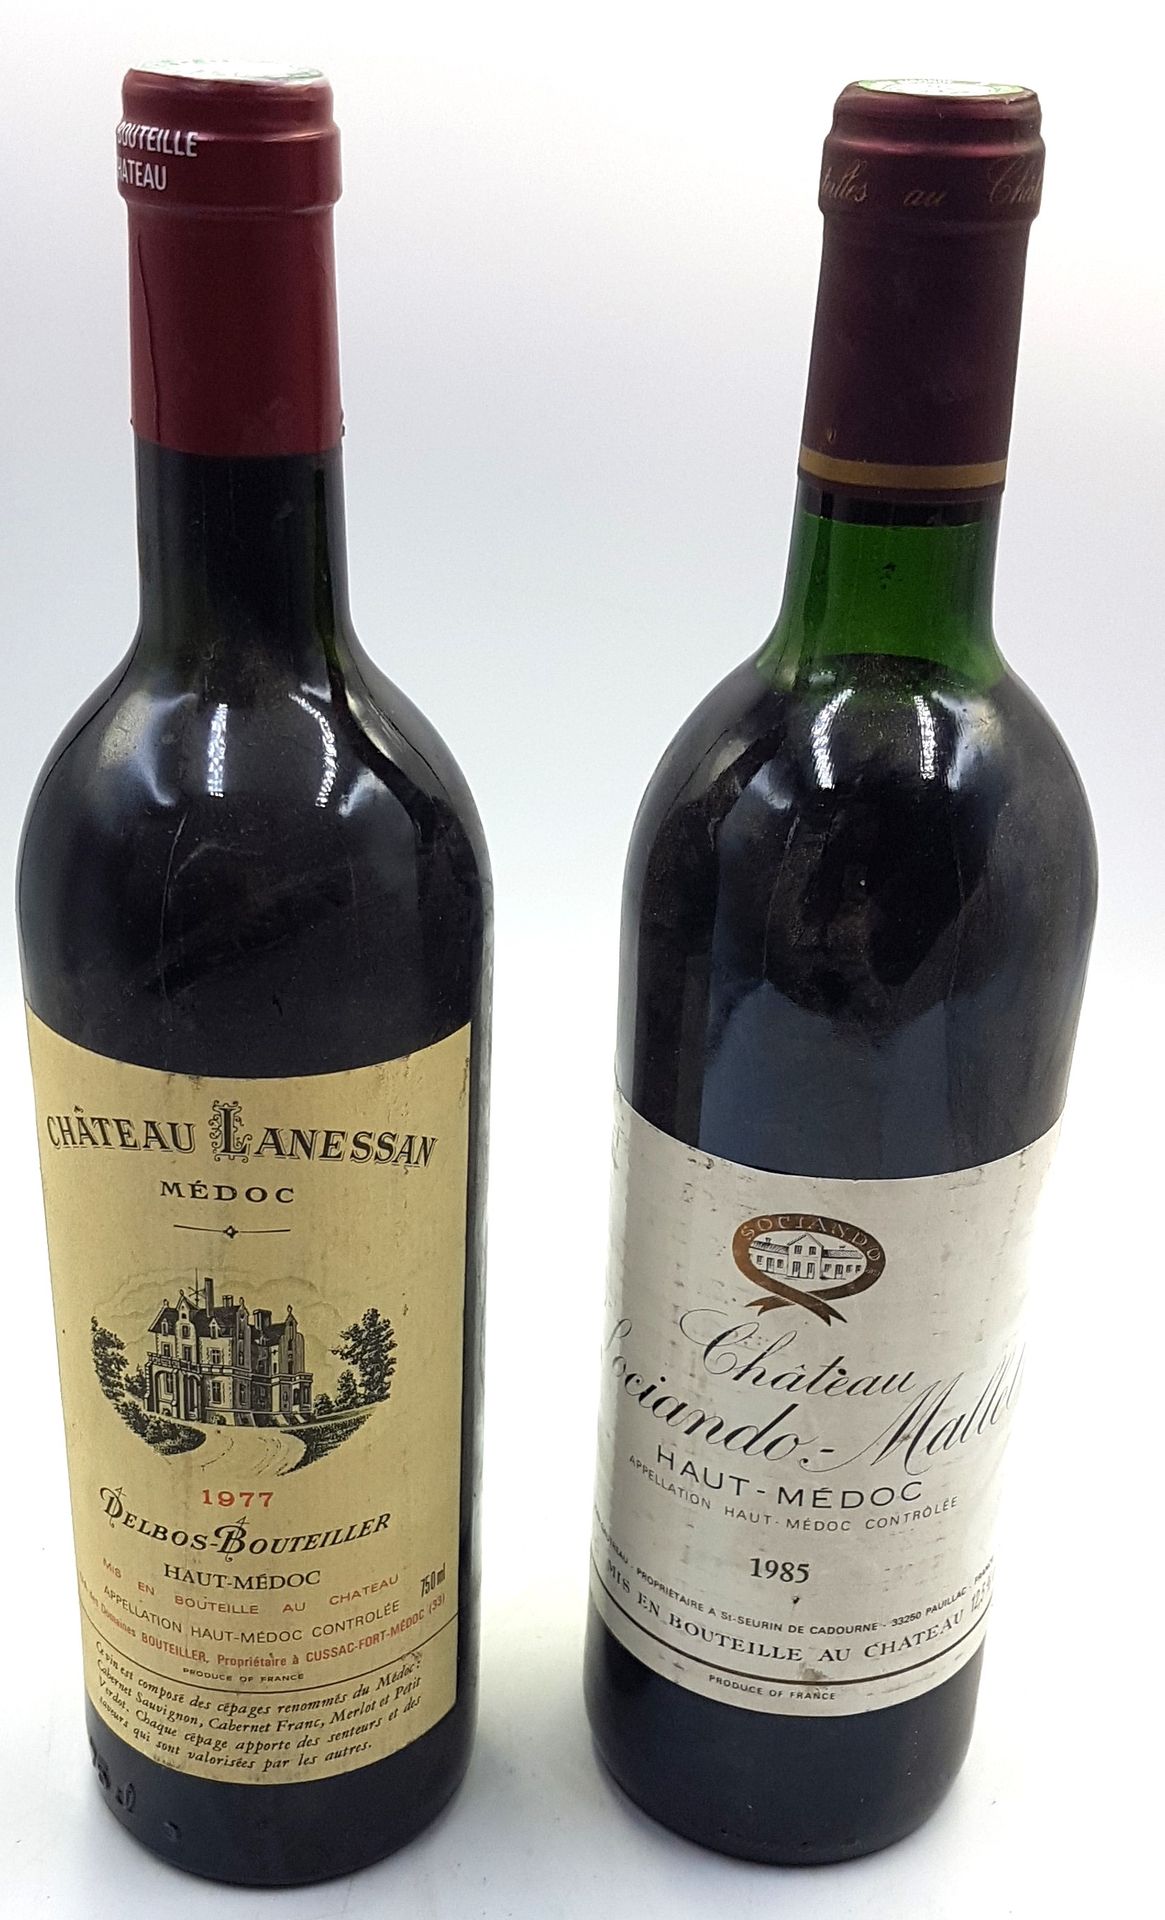 Null 上梅多克，苏西多-马莱特酒庄，1985年
还包括 
Chateau Lanessan, Delbos-Bouteiller, 1977
(按原样出售）